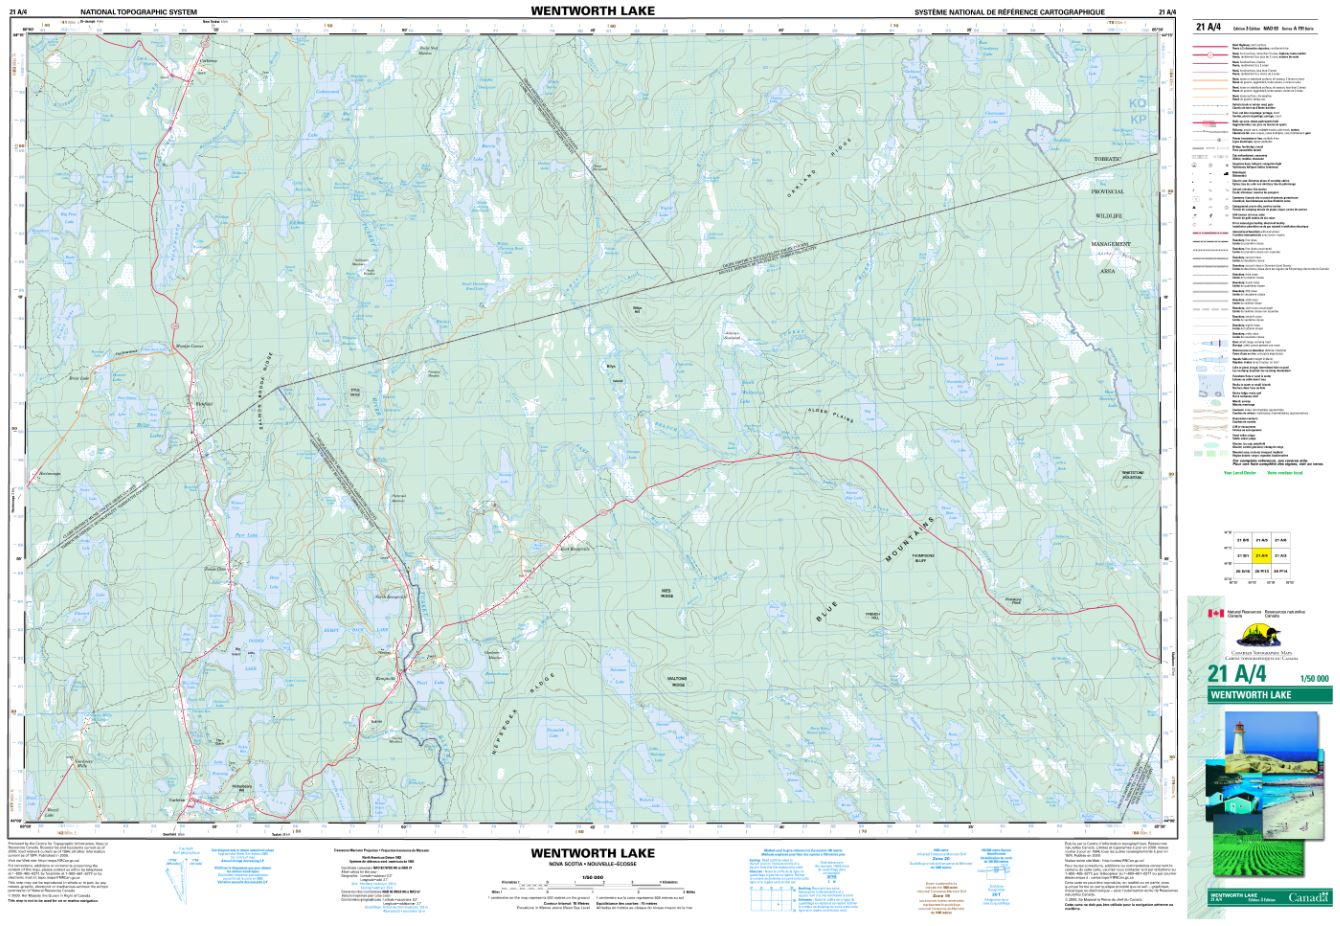 21A/04 Wentworth Lake Topographic Map Nova Scotia